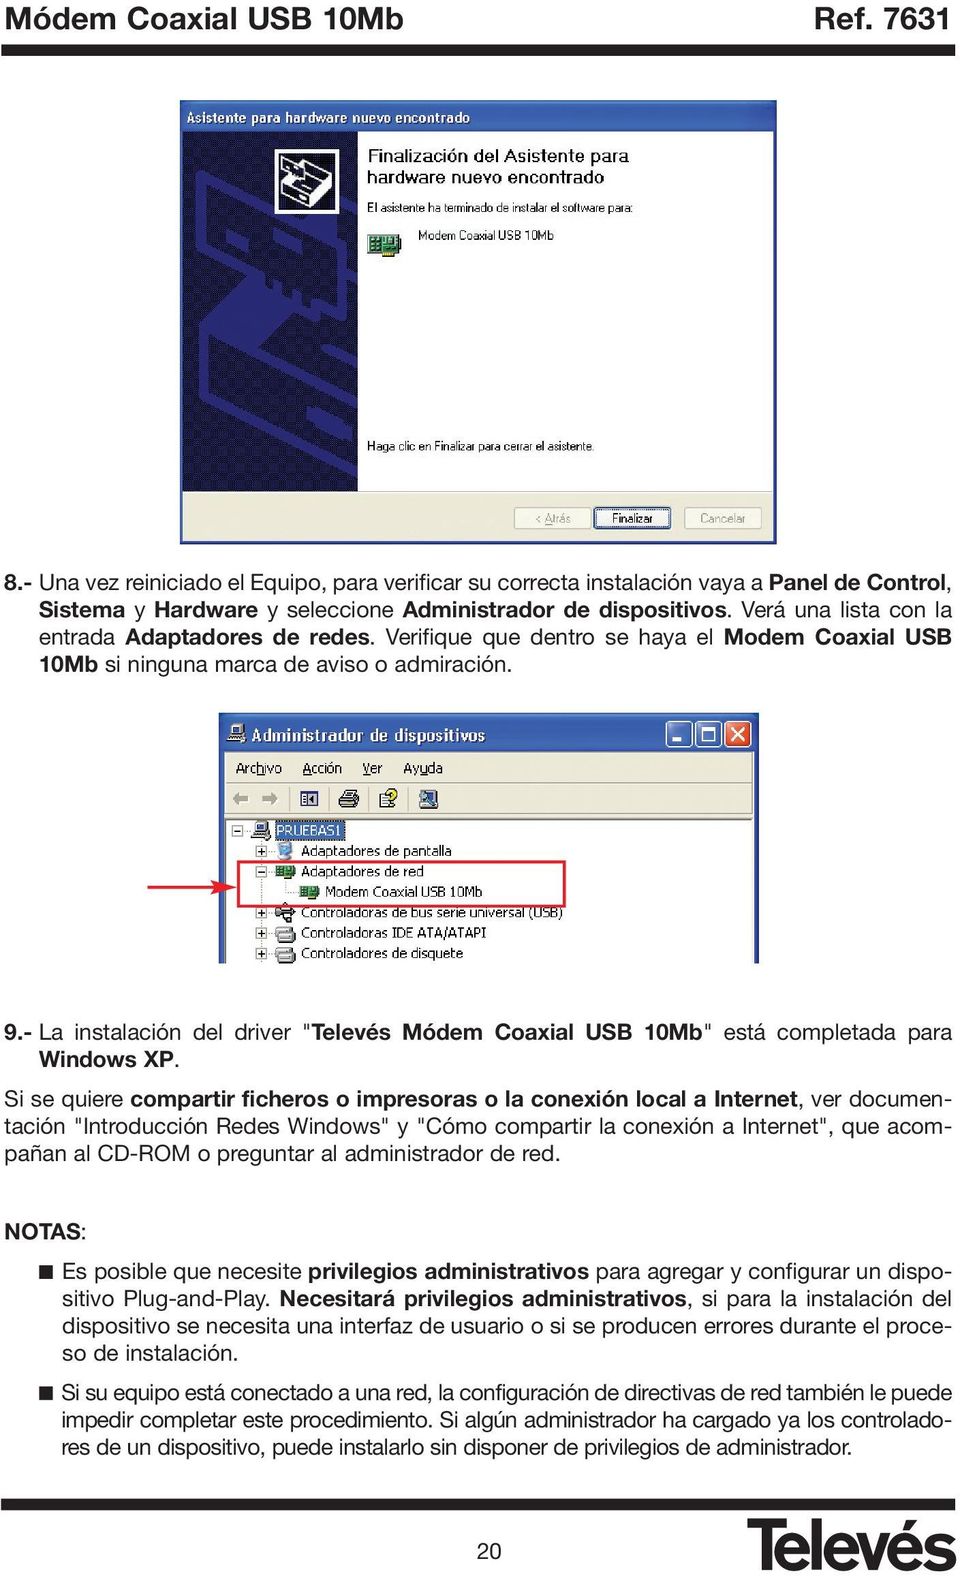 - La instalación del driver "Televés Módem Coaxial USB 10Mb" está completada para Windows XP.